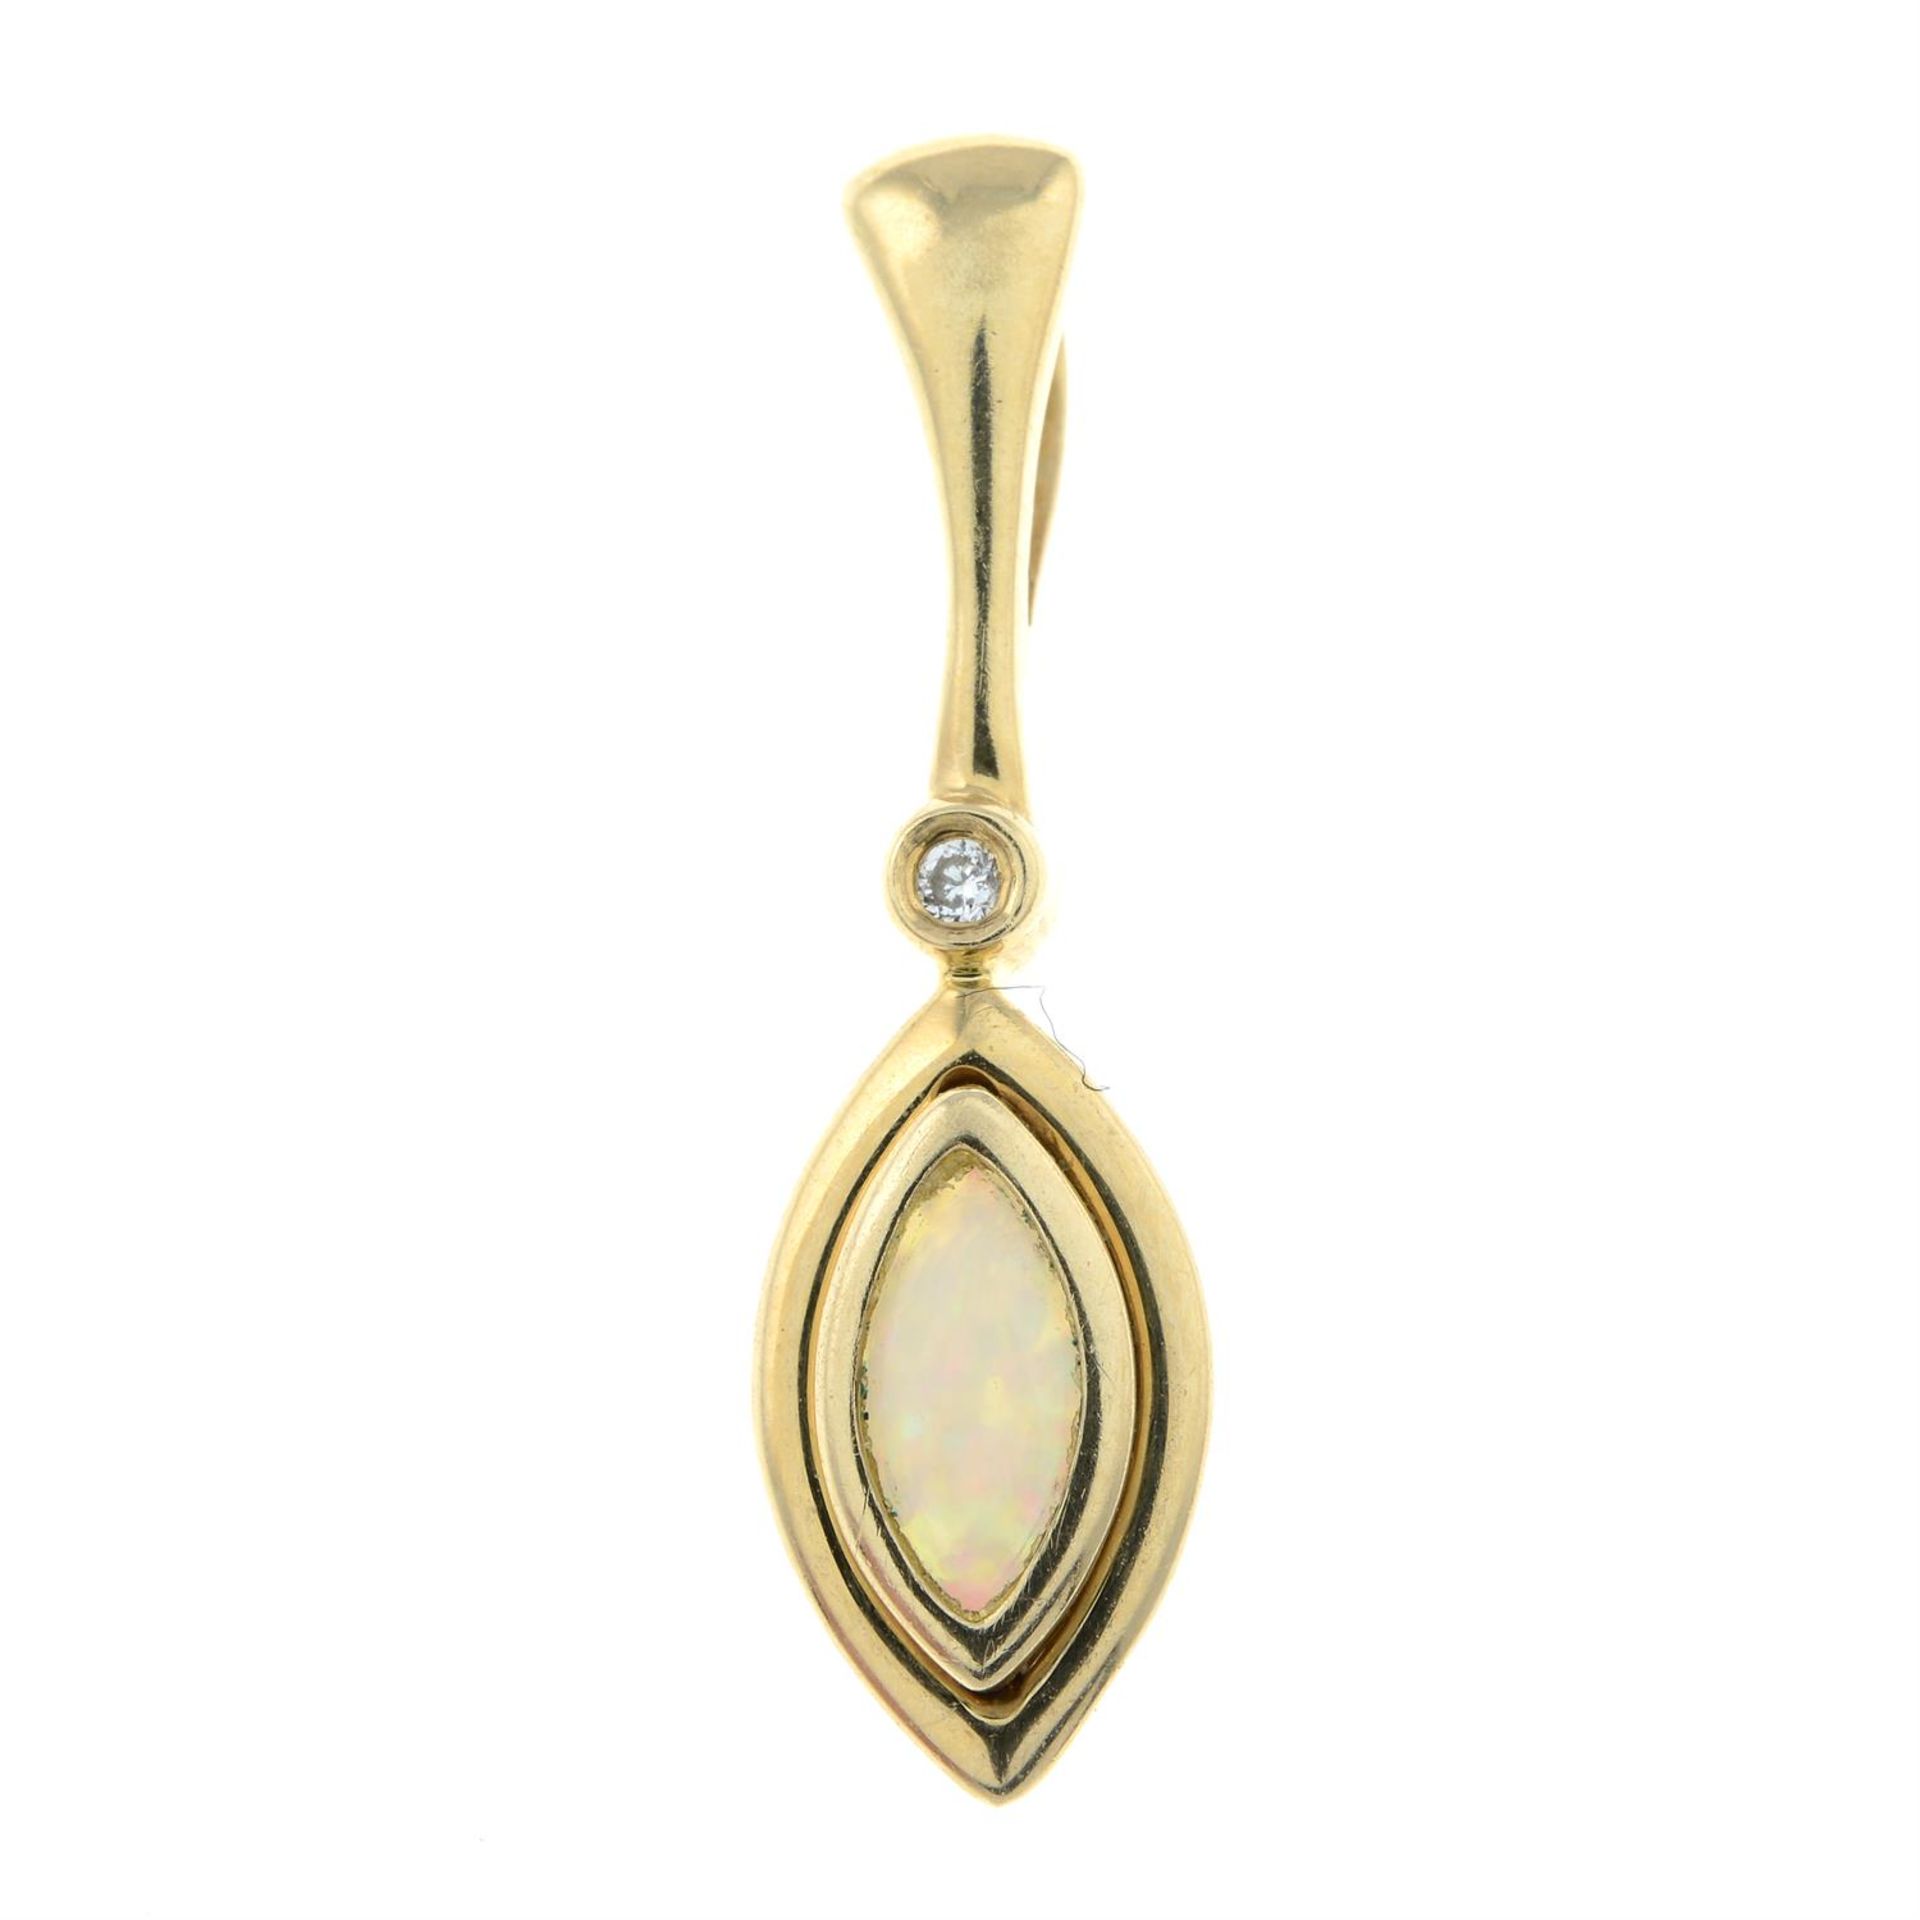 A 14ct gold opal and brilliant-cut diamond pendant.